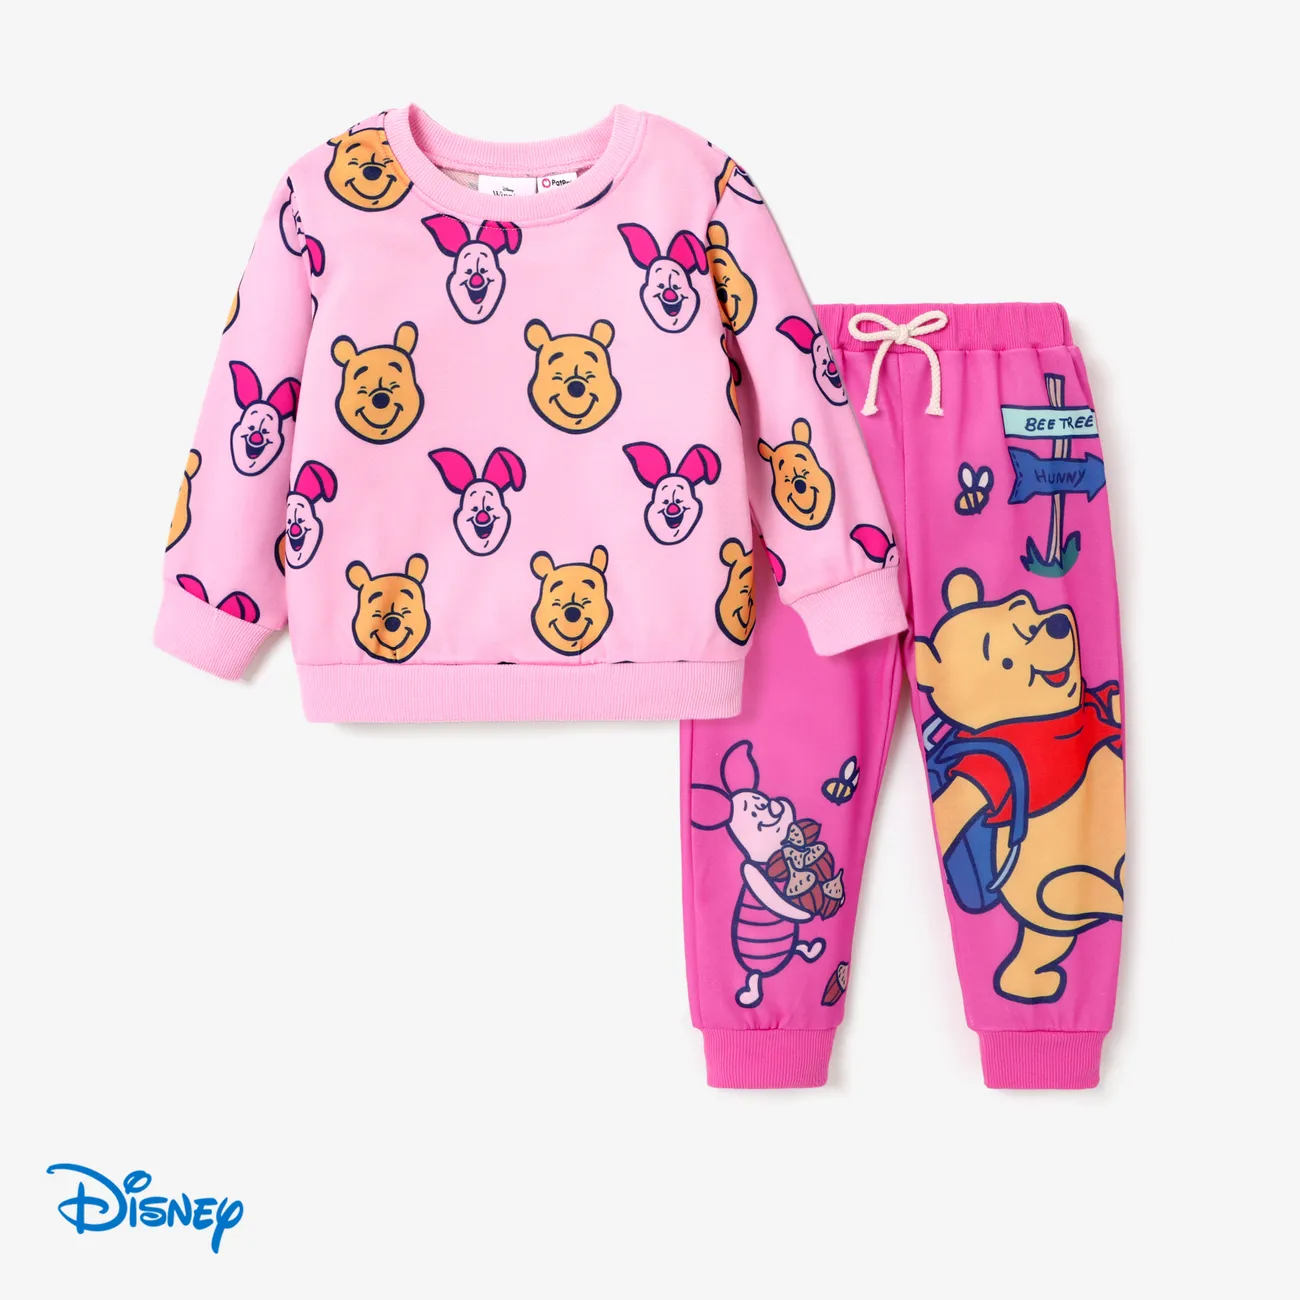 Disney Winnie the Pooh Toddler Boy/Girl Character Pattern Fun Print Sweatshirt or Pants Pink big image 1